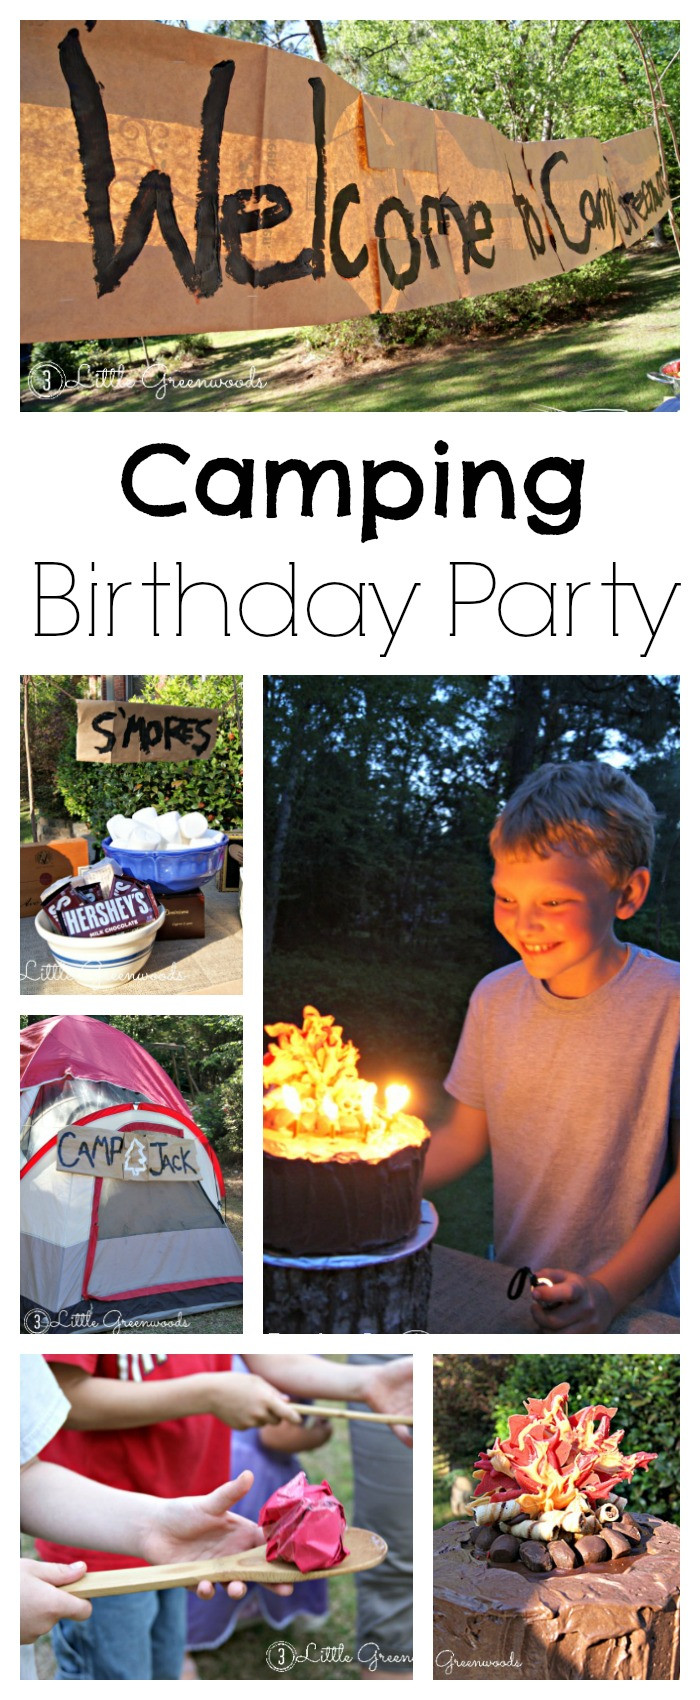 Camping Birthday Party Games
 Camping Birthday Party Fun